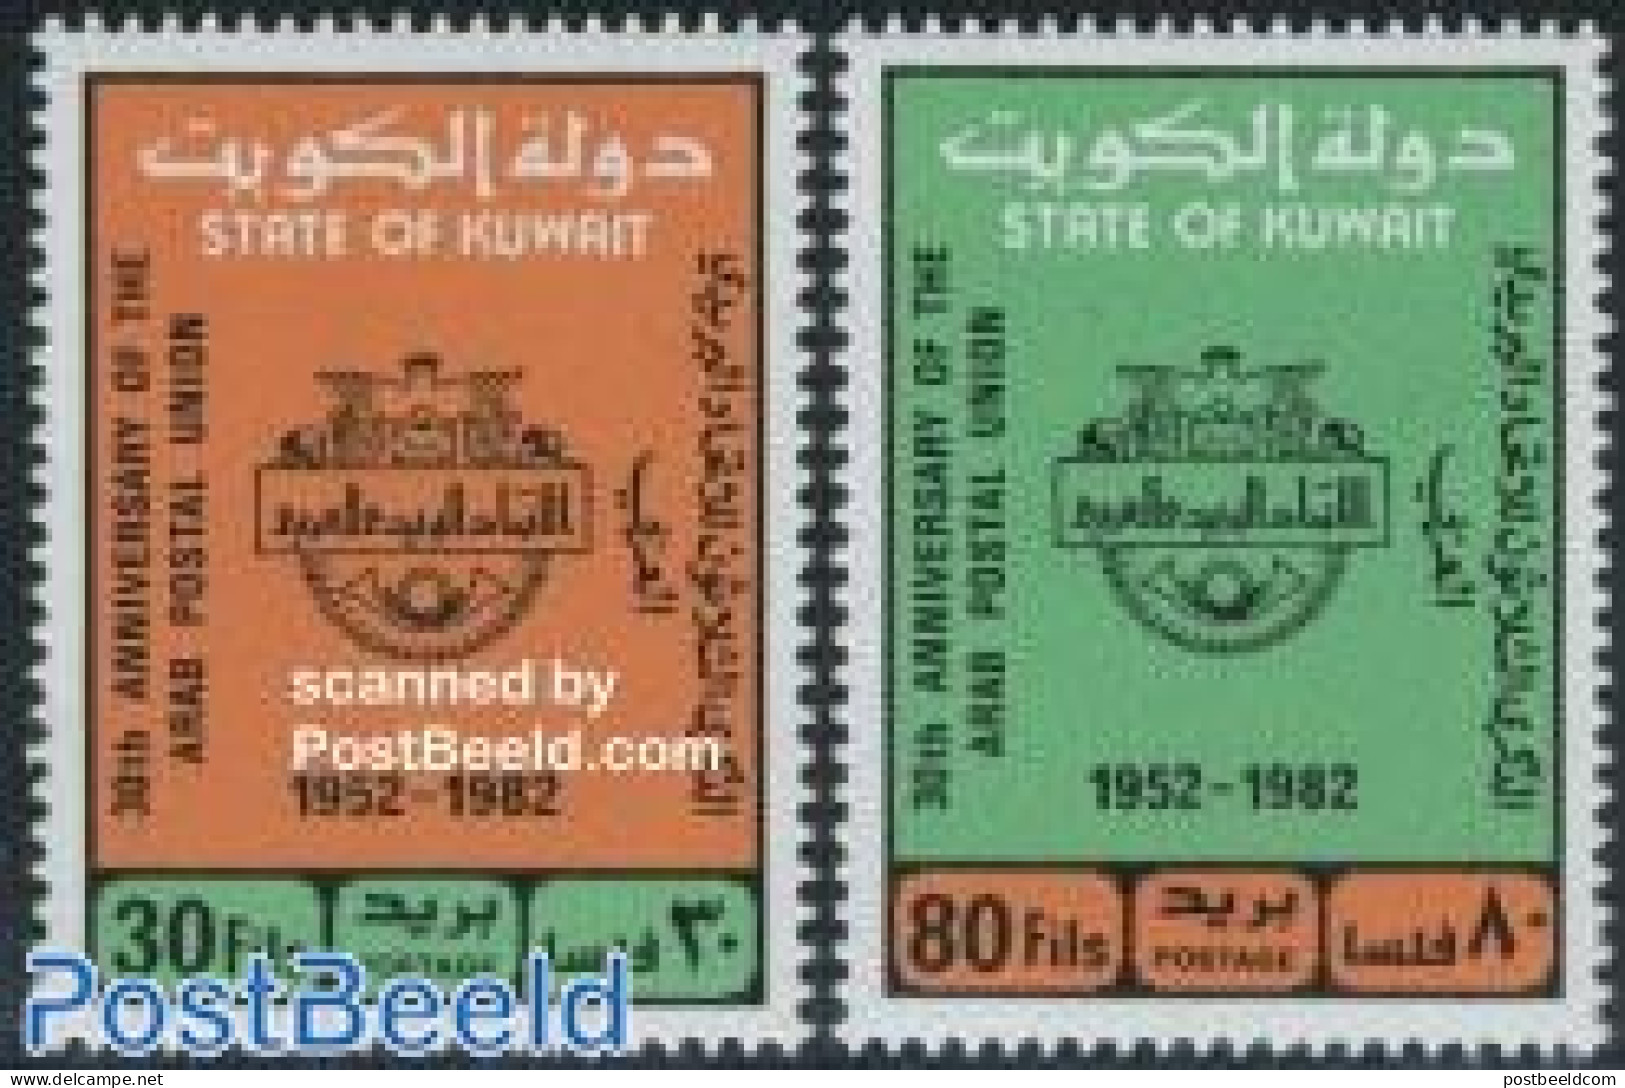 Kuwait 1982 Arab Postal Union 2v, Mint NH, Post - Post